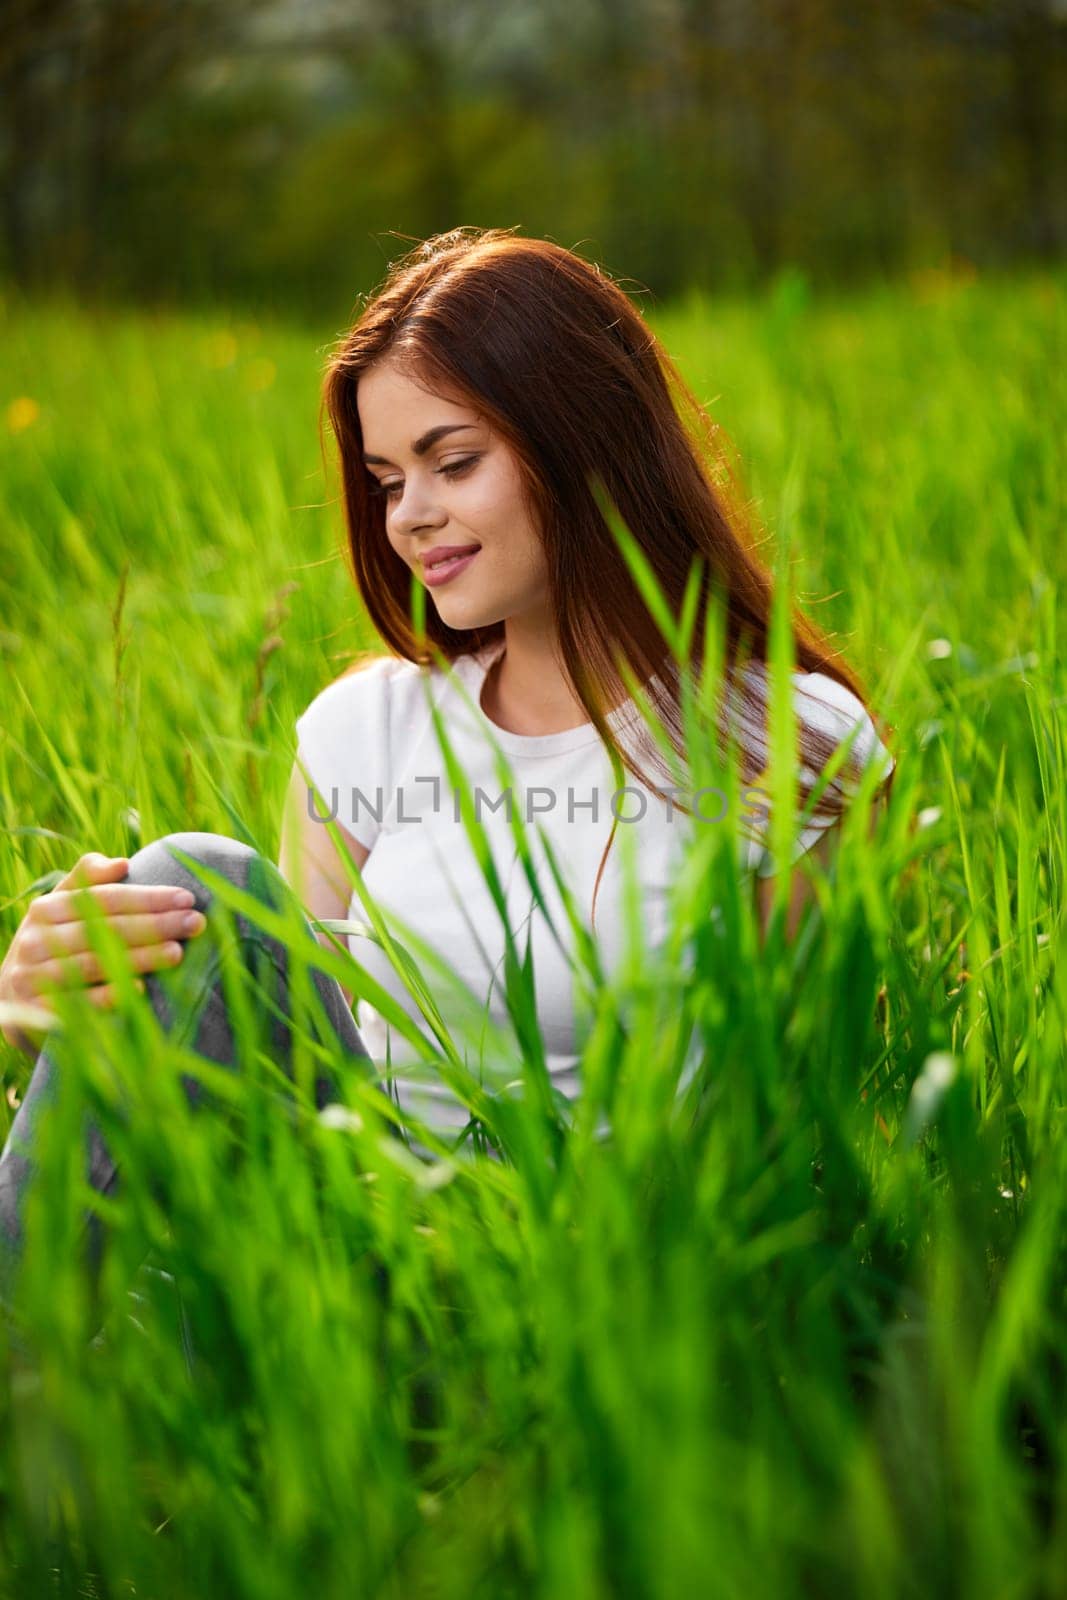 portrait of a joyful cute woman sitting in the grass. High quality photo